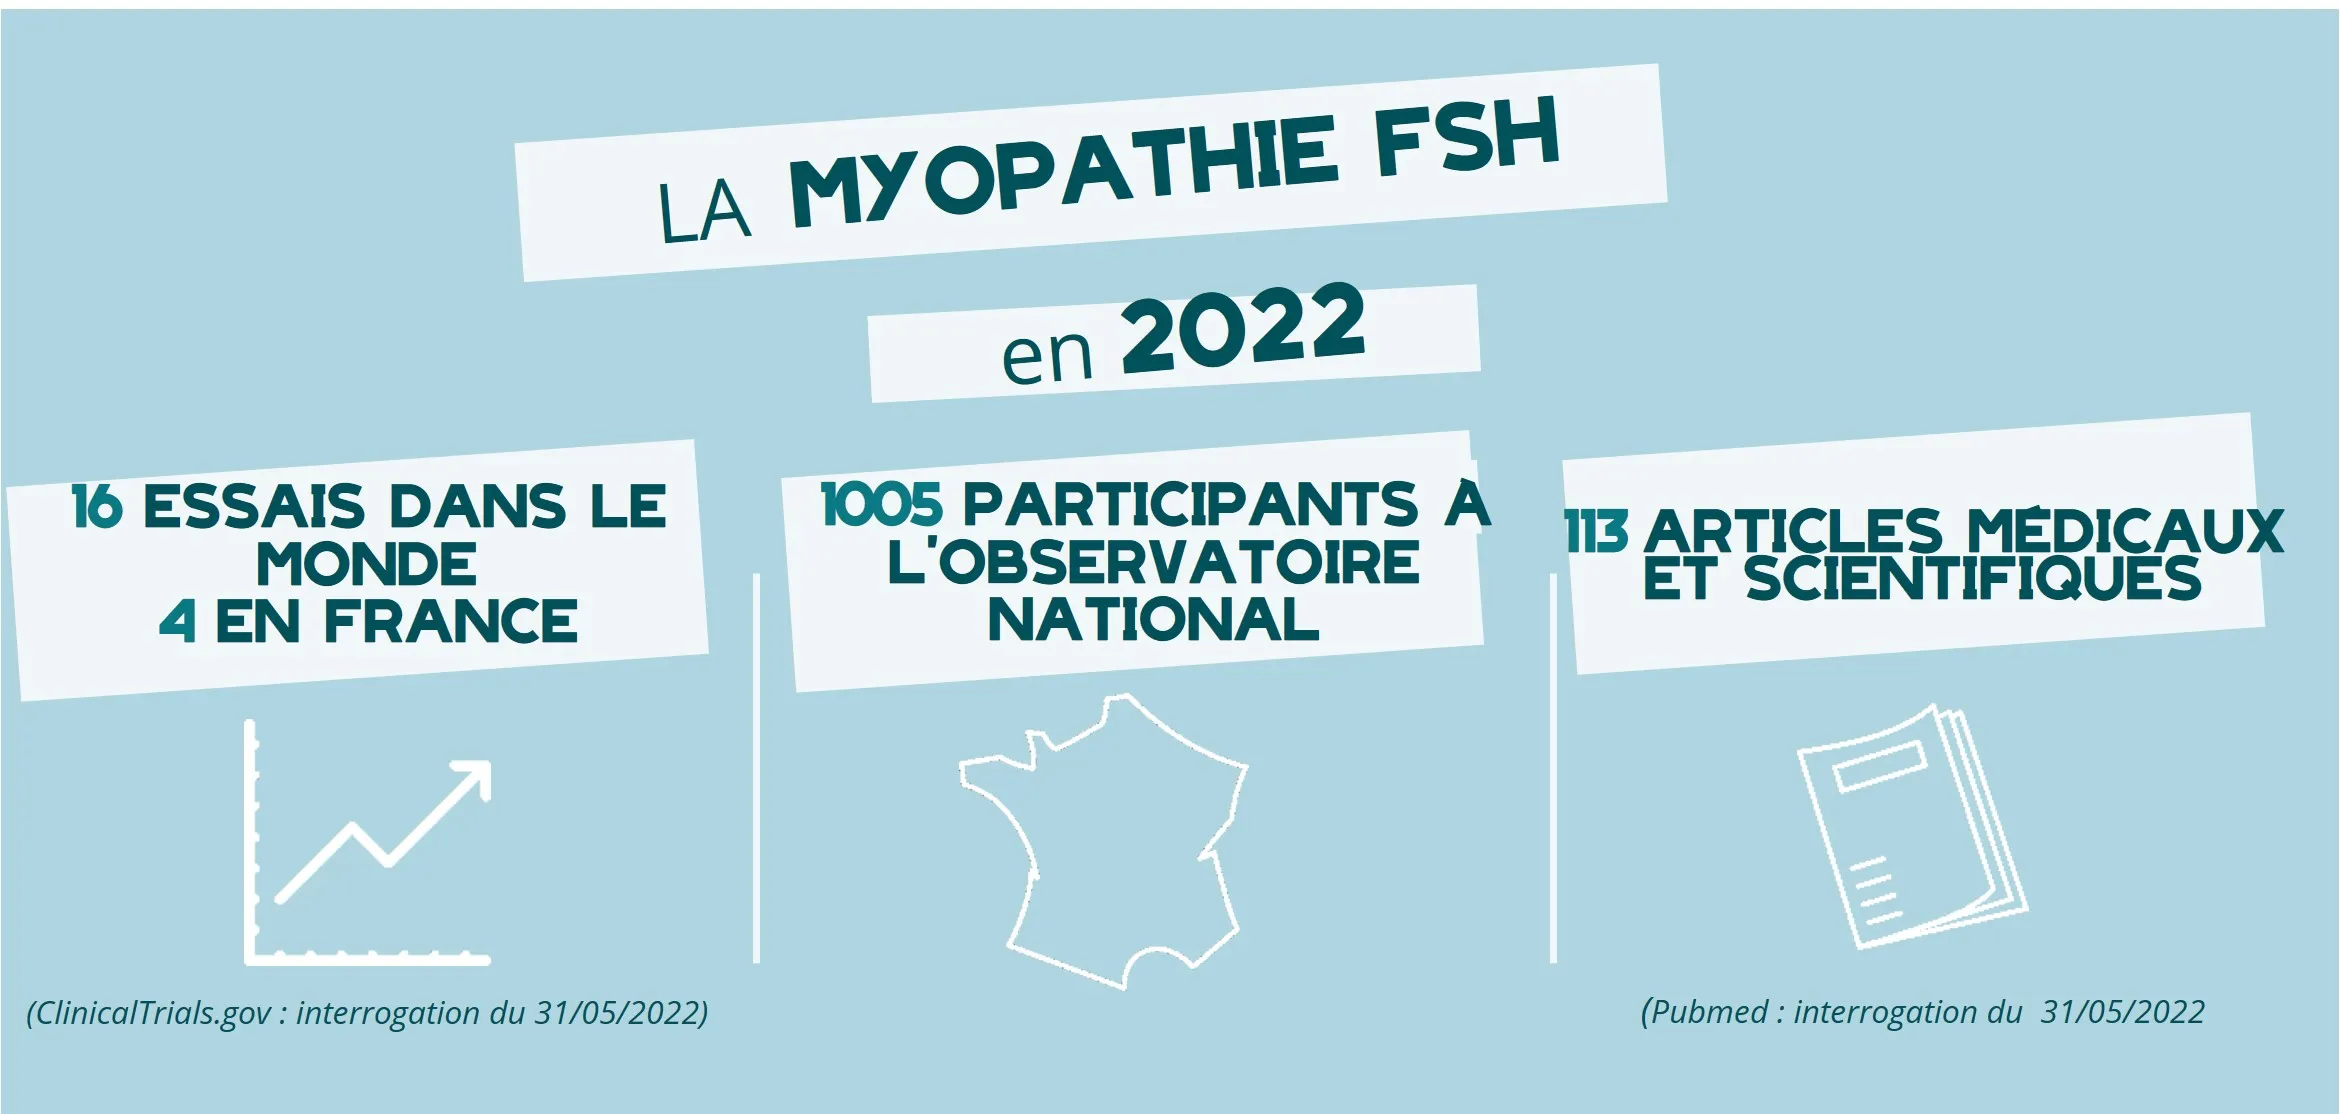 Infographie - La Myopathie FSH en 2022